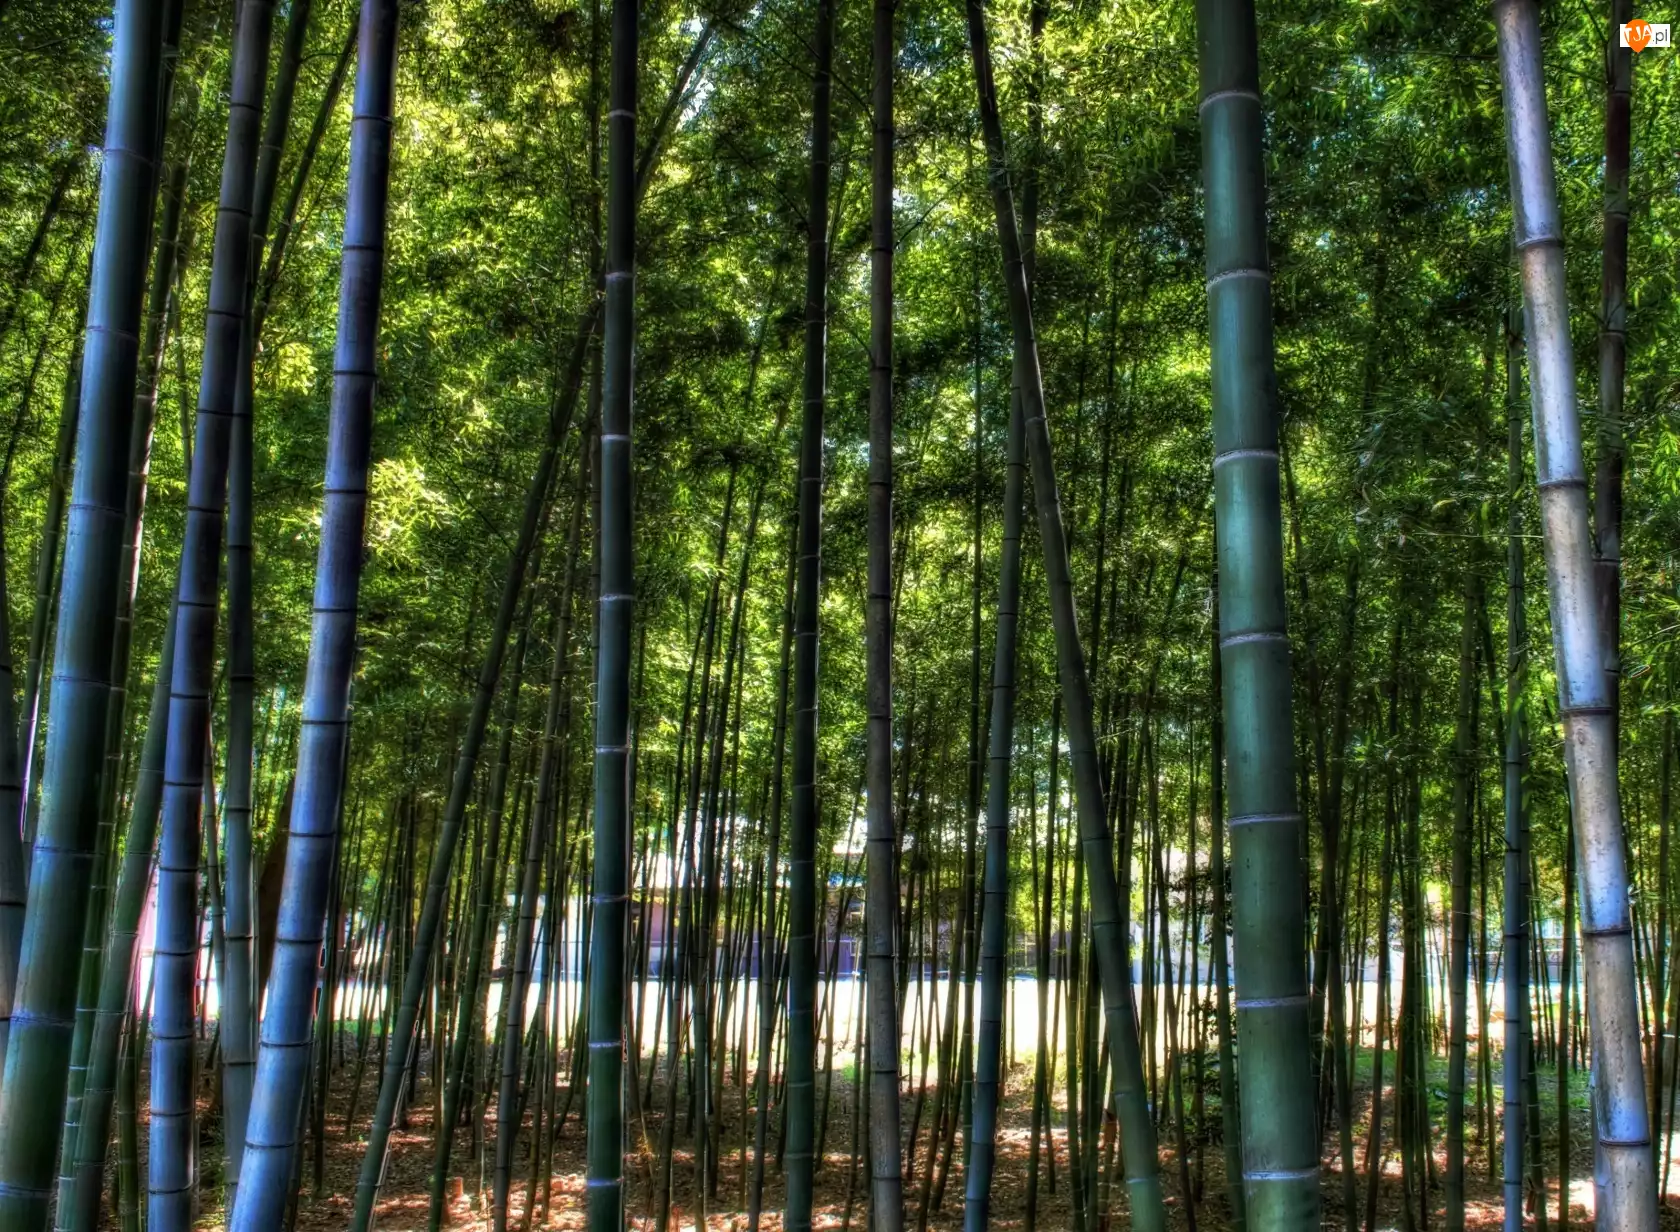 Bambusowy, Las